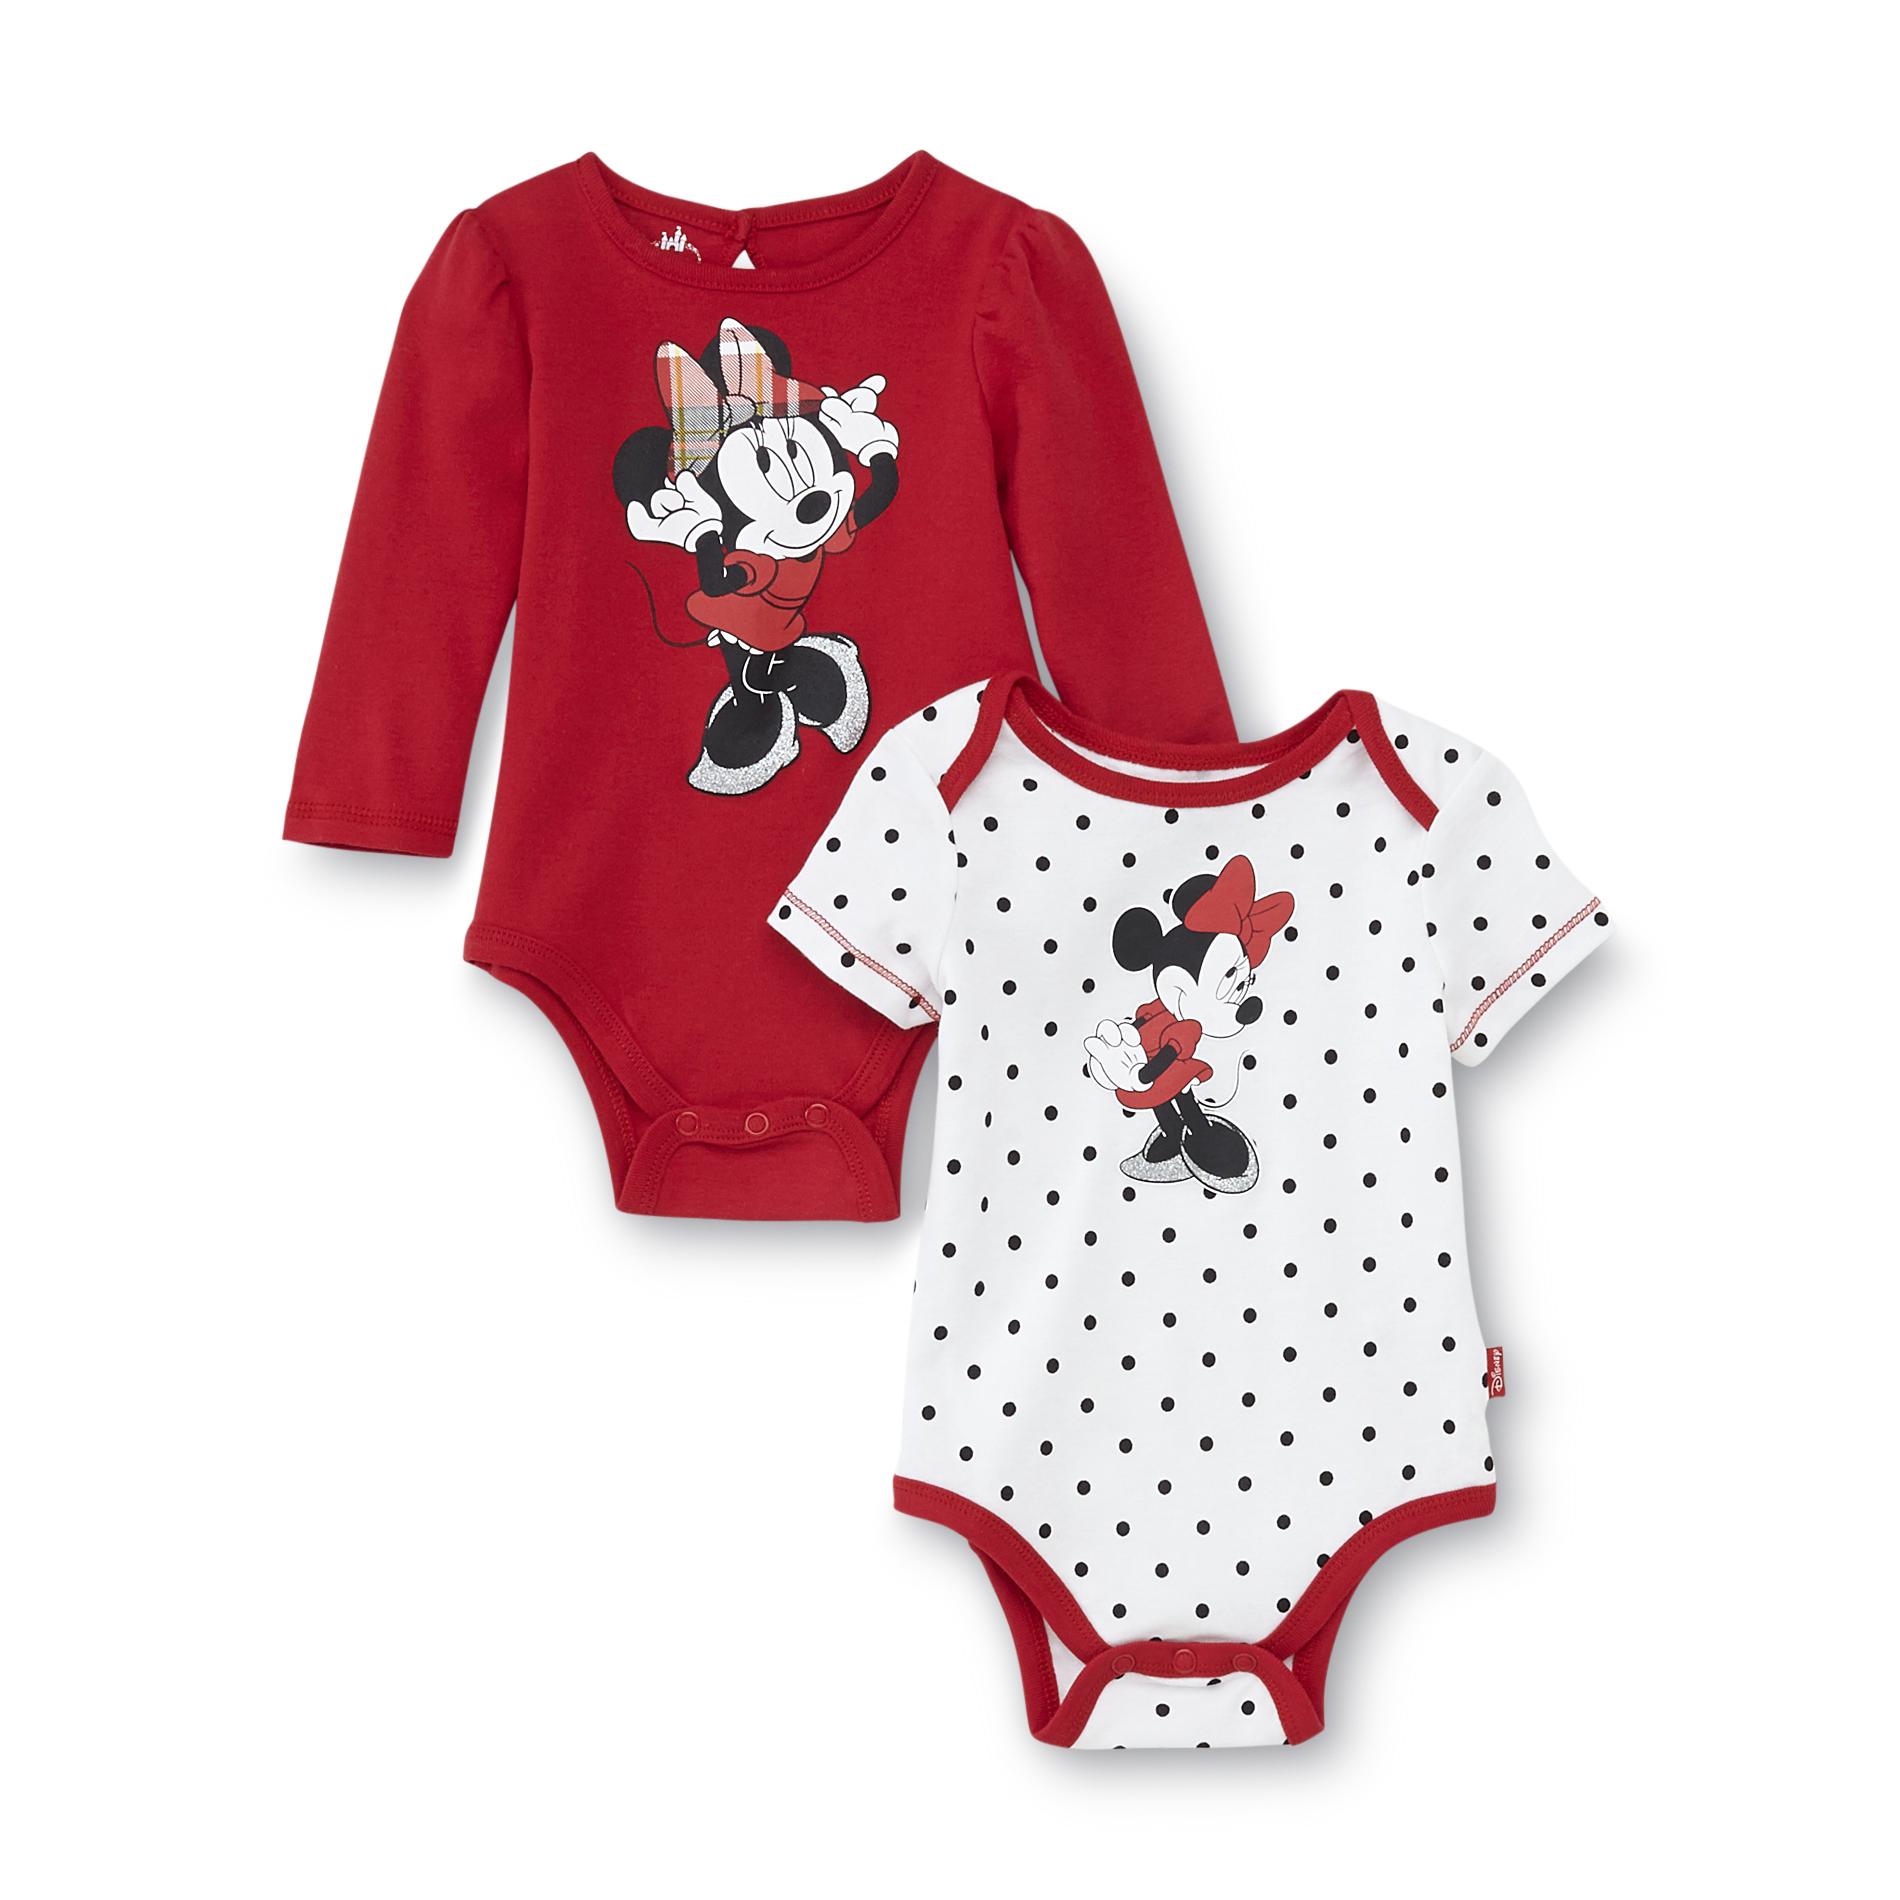 Disney Minnie Mouse Newborn Girl's 2-Pack Bodysuits - Polka-Dot